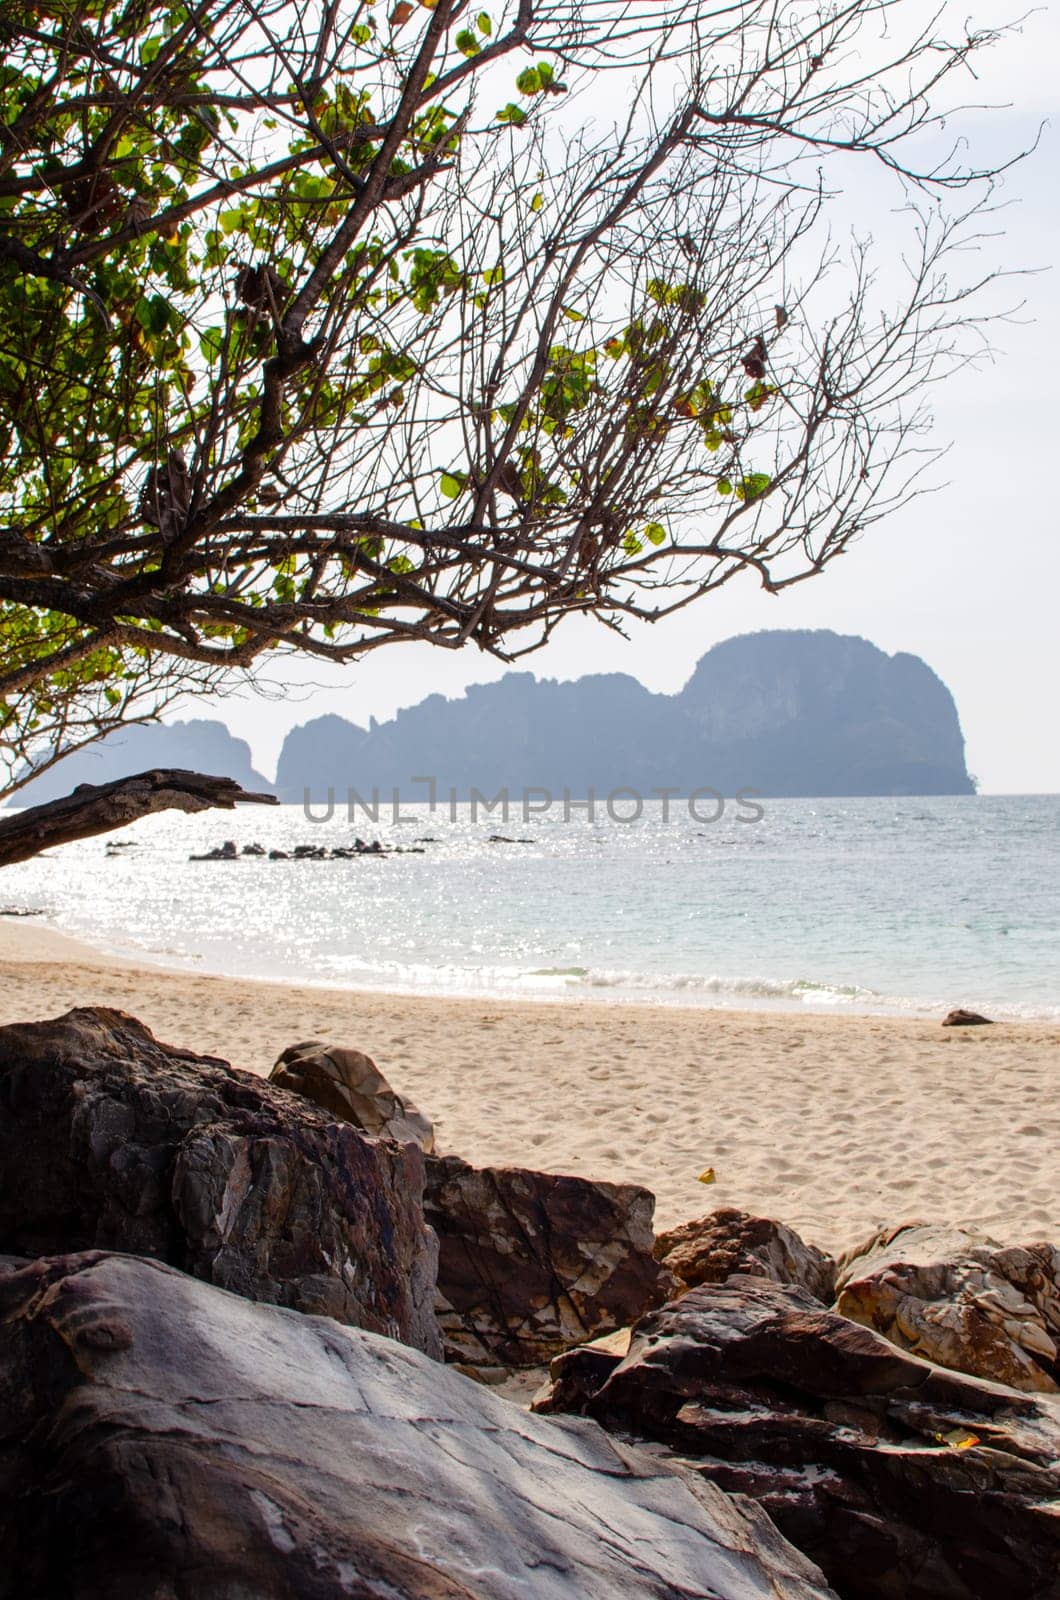 Rocks and stone beach. Thailand nature landscape